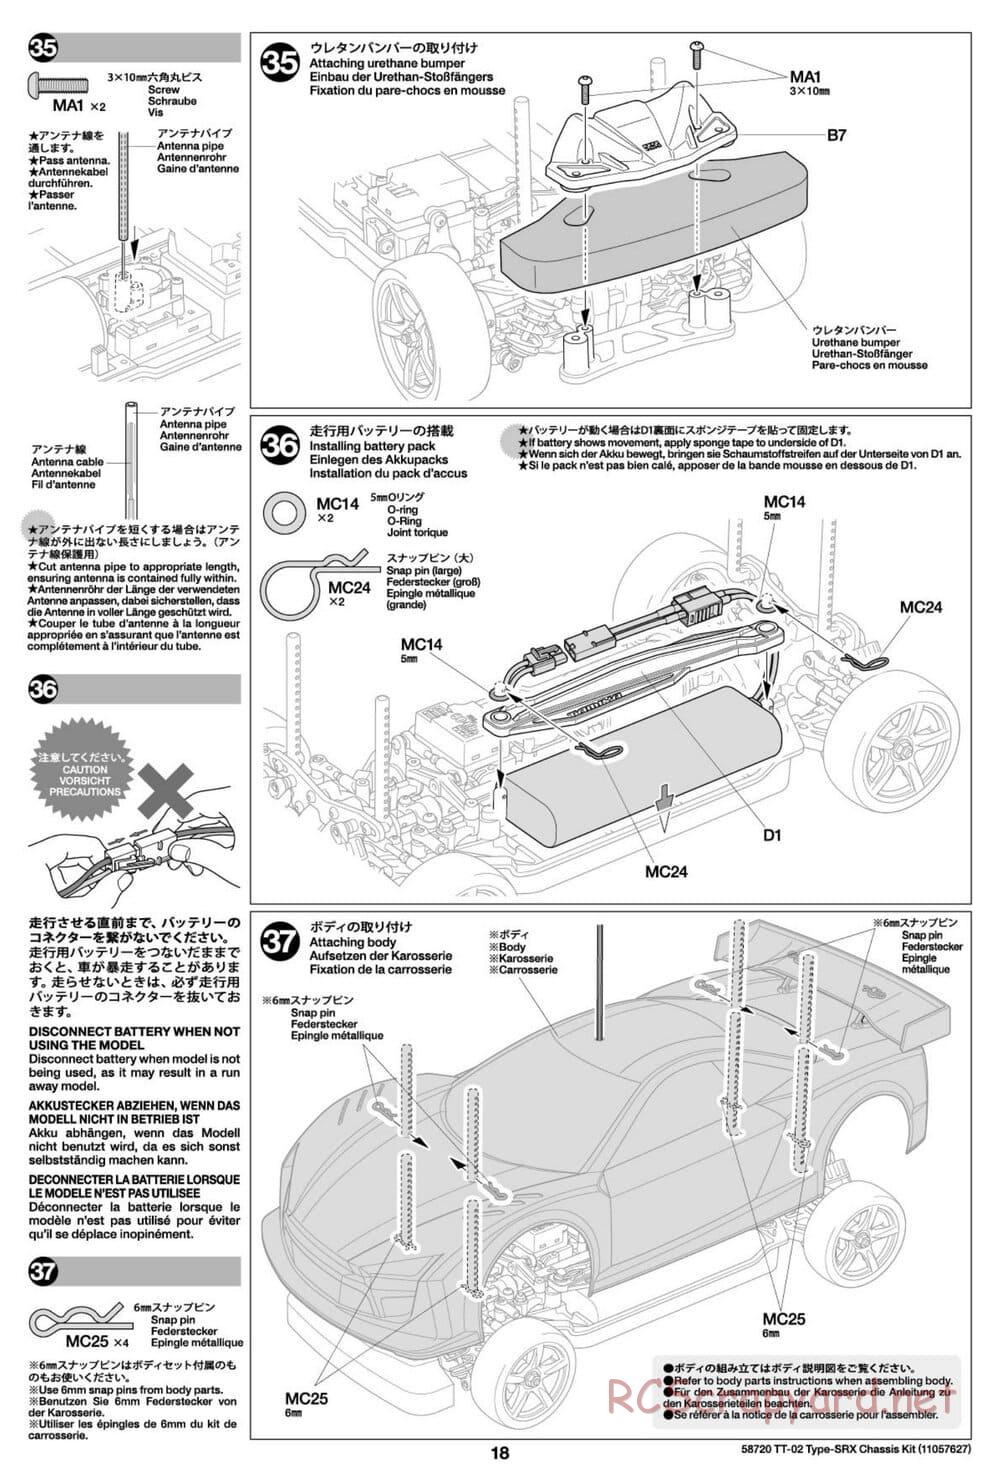 Tamiya - TT-02 Type-SRX Chassis - Manual - Page 18